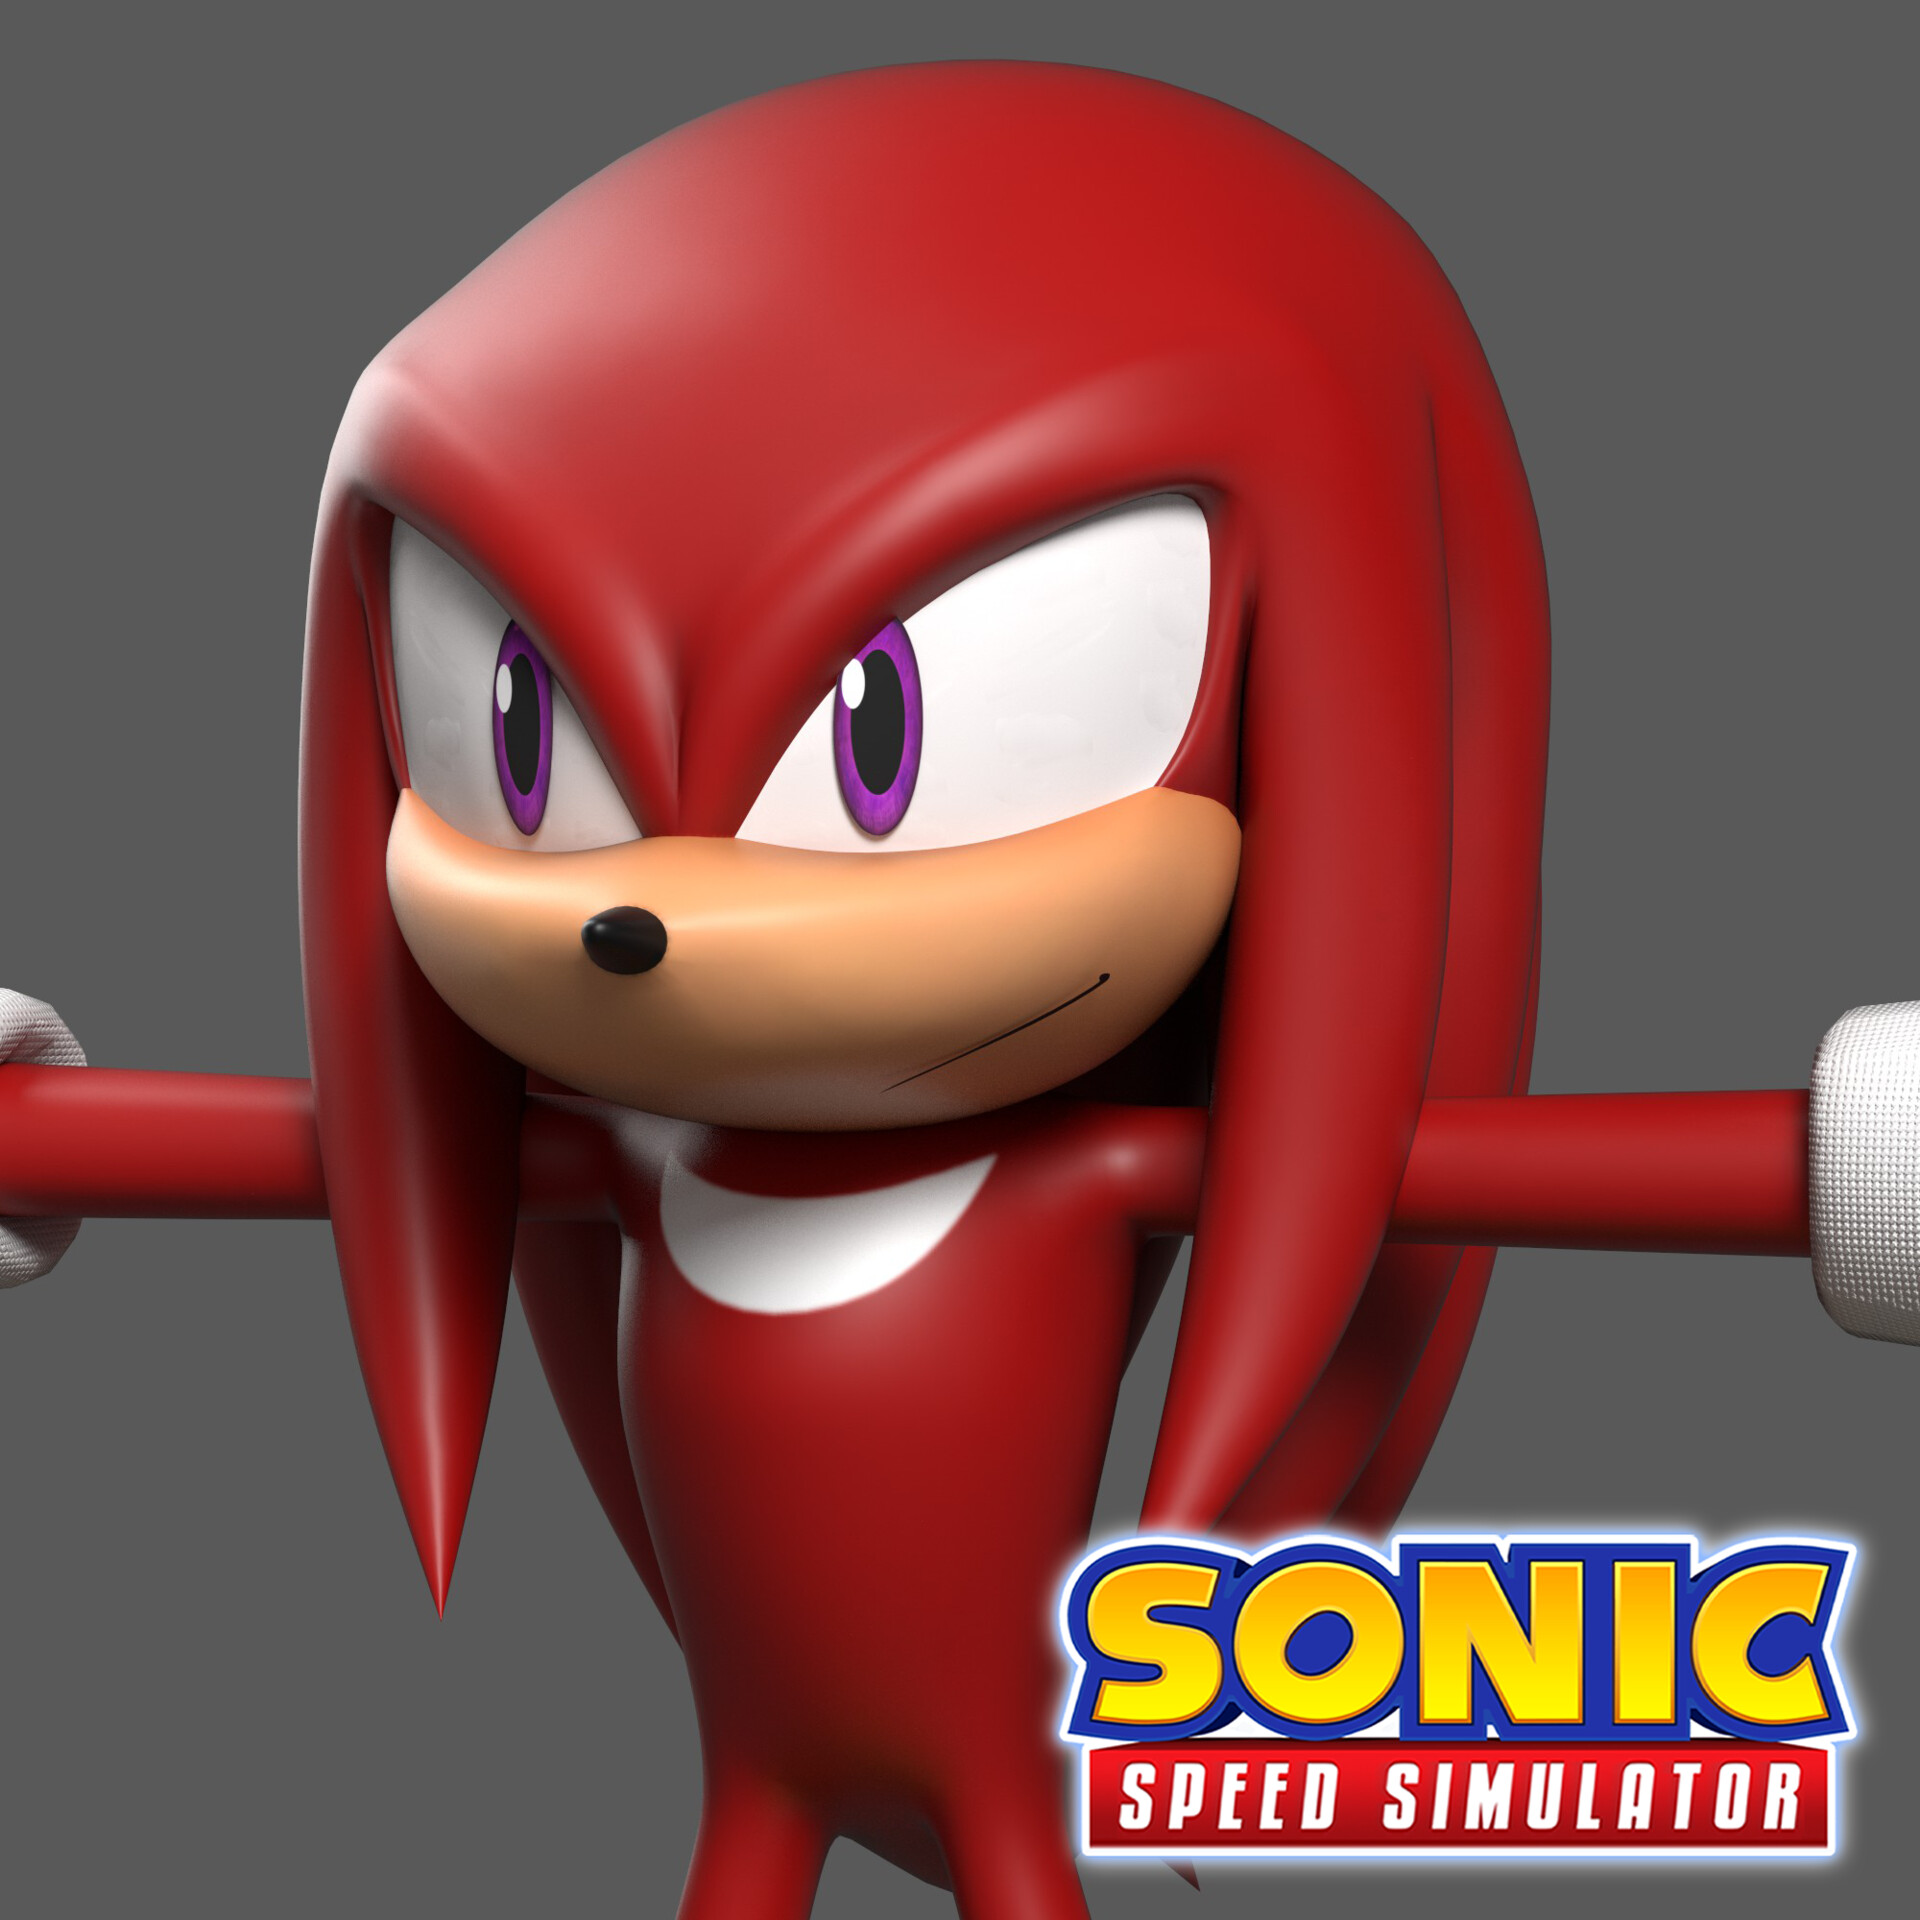 ArtStation - Roblox Artwork - Roblox Sonic Speed Simulator